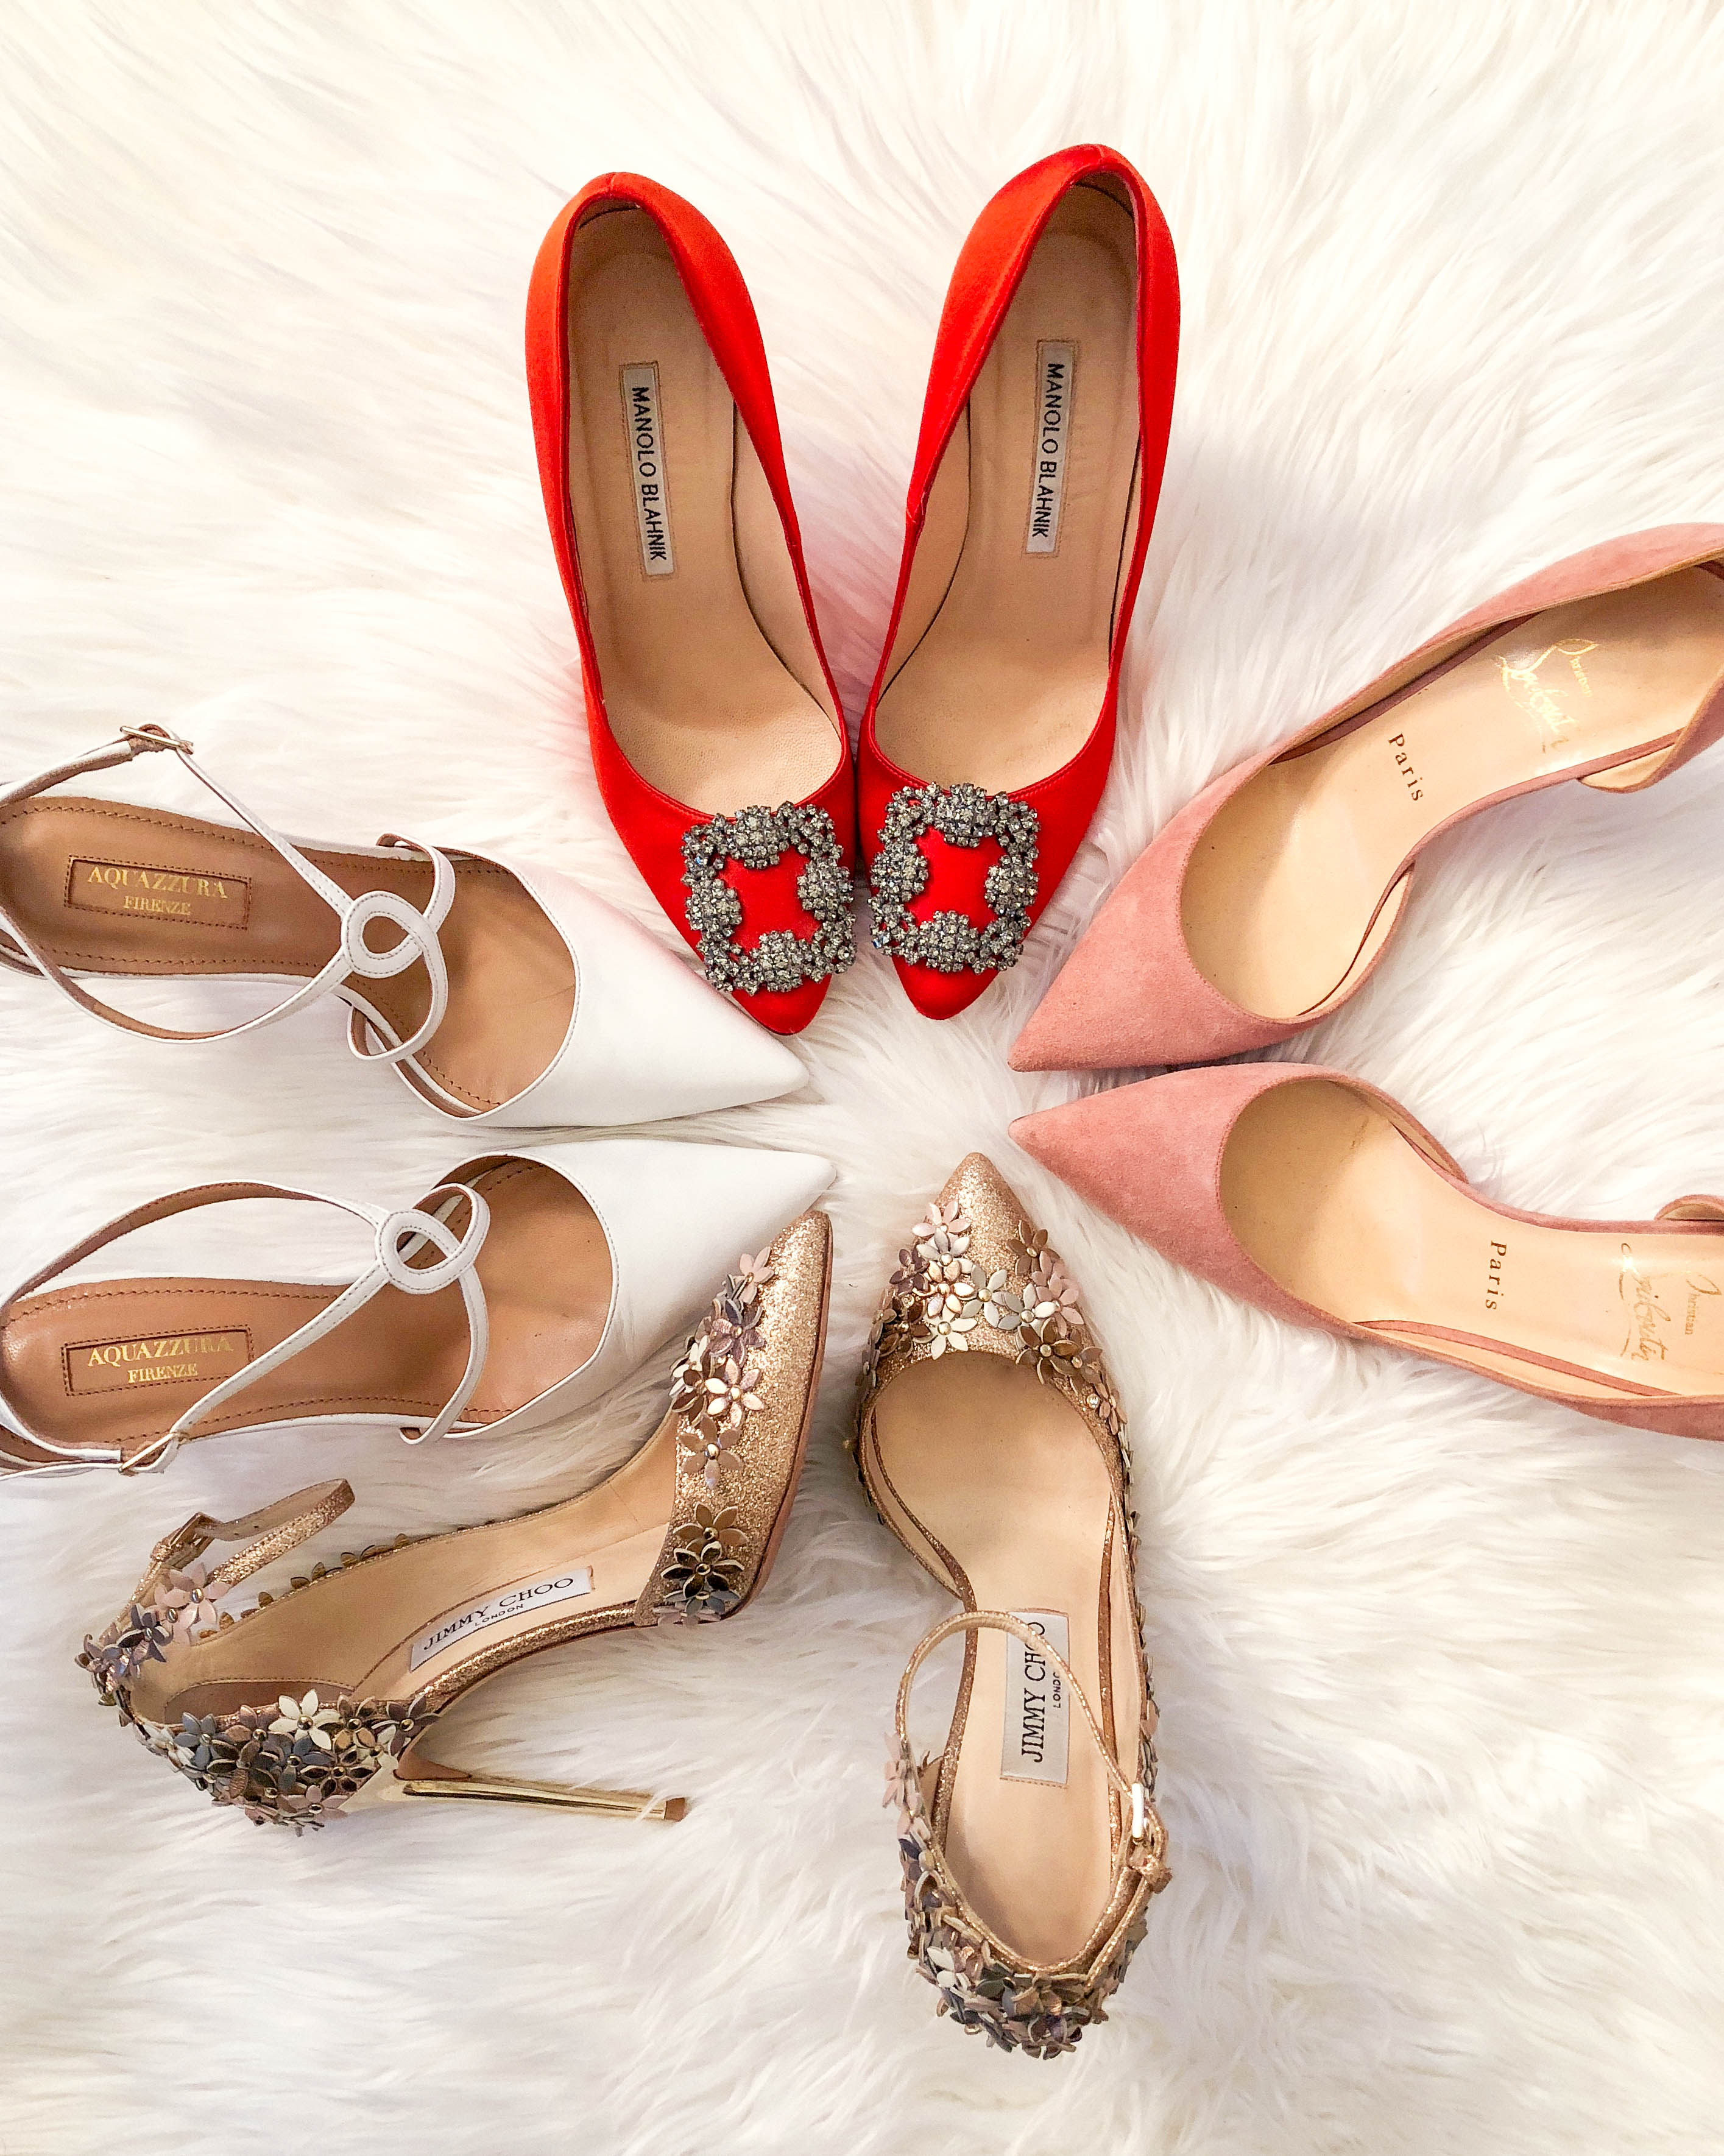 Holiday-heels-manolo-blahnik-aquazurra-jimmy-choo-manolo-blahnik-hangisi-holiday-heels